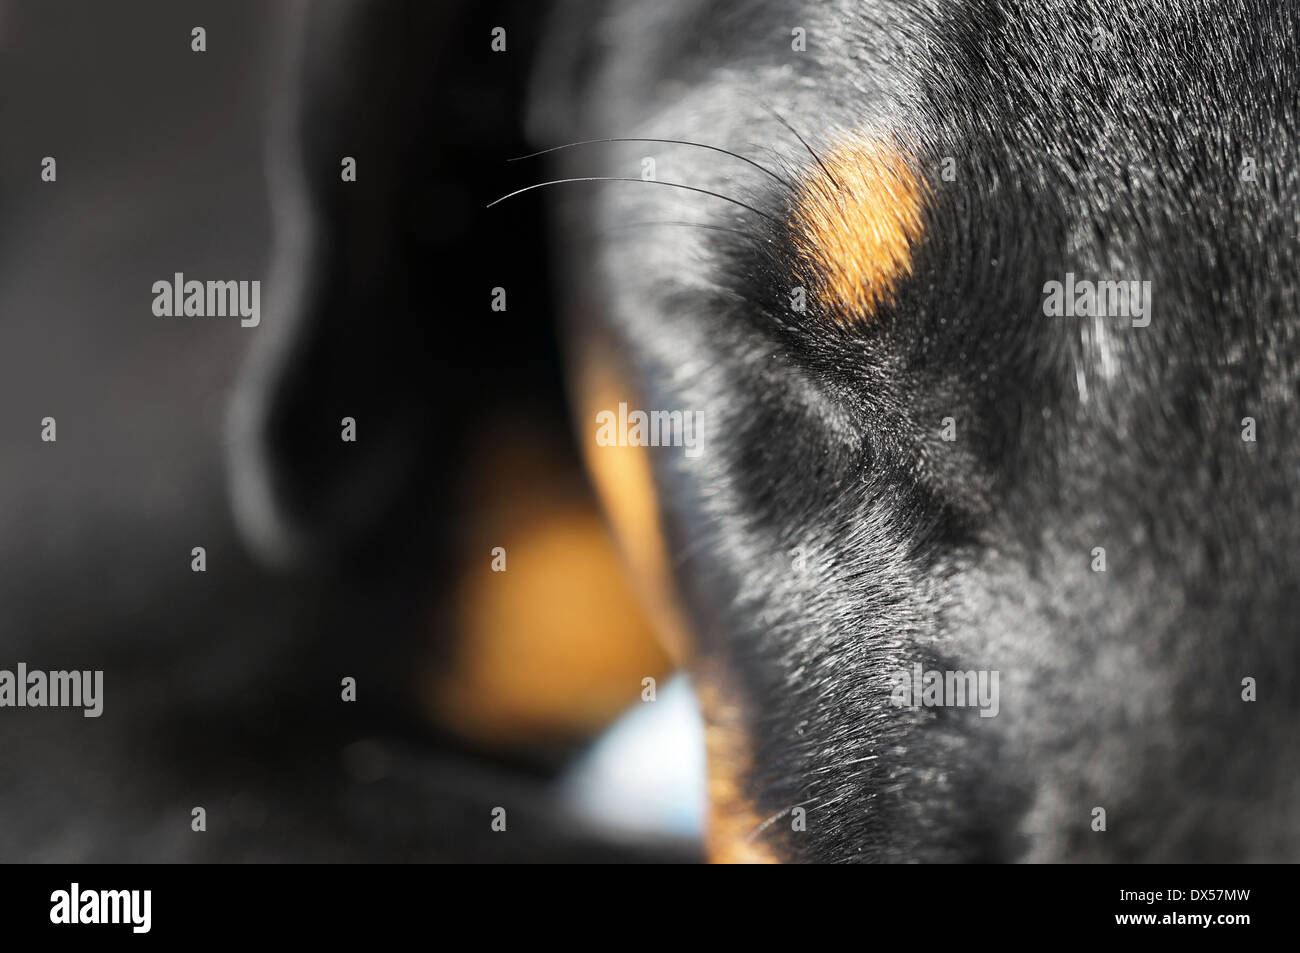 close-up view into an closed eye of a doberman dog, sleeping dog, doberman resting Stock Photo